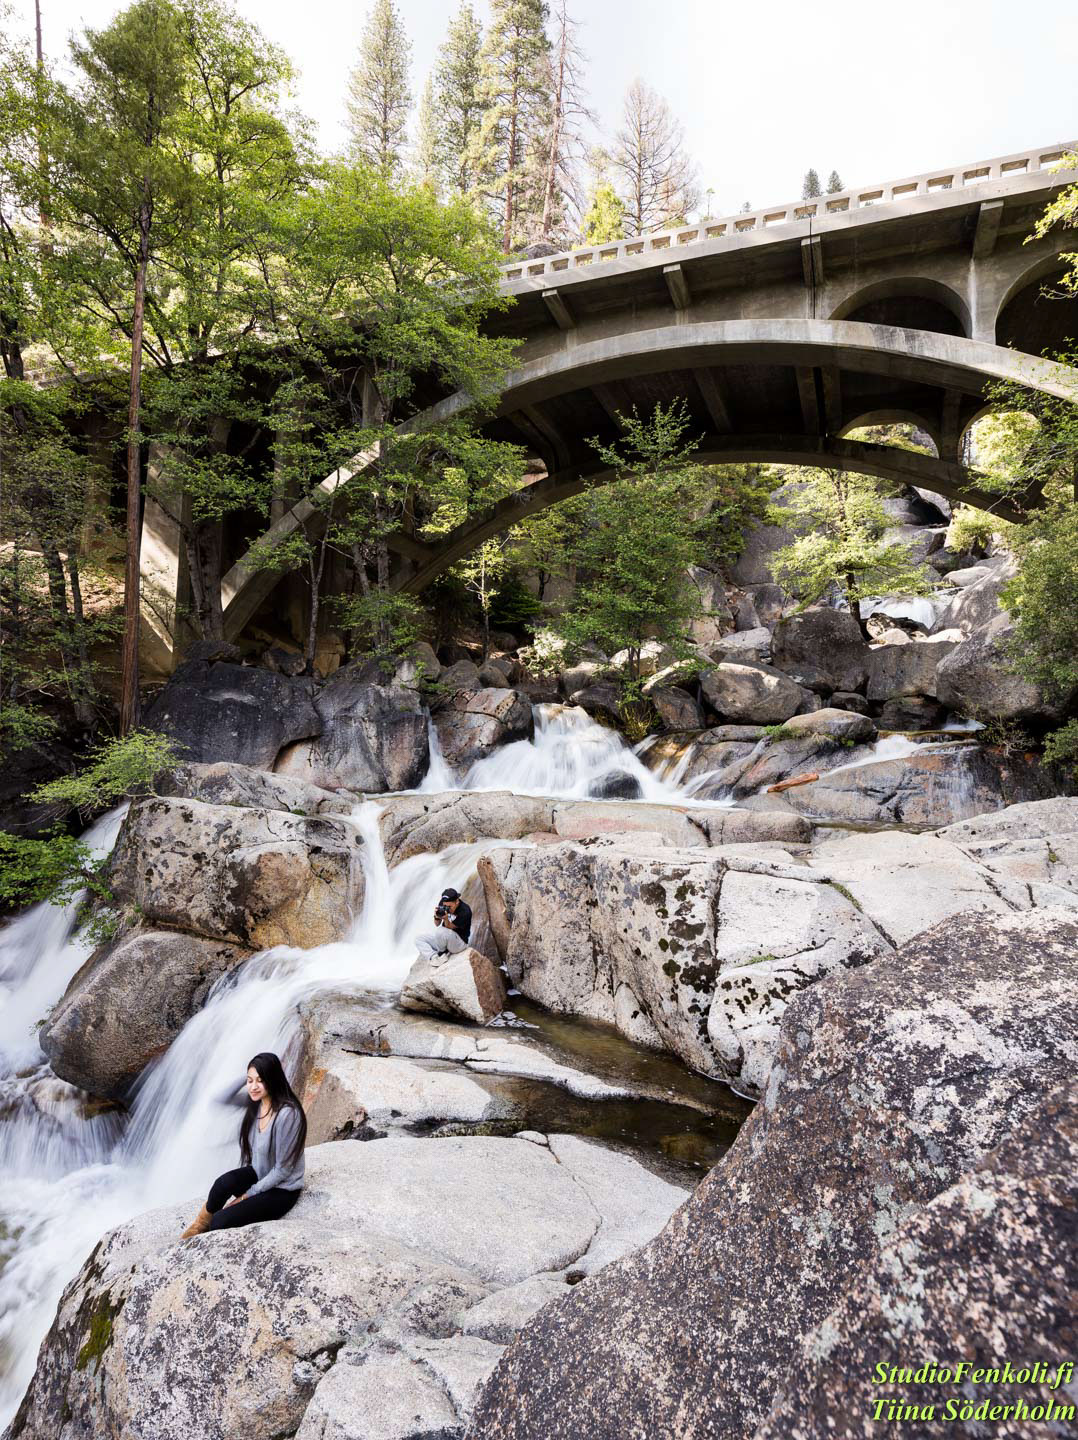 Adobe Portfolio usa California Travel RoadTrip Landscape yosemite